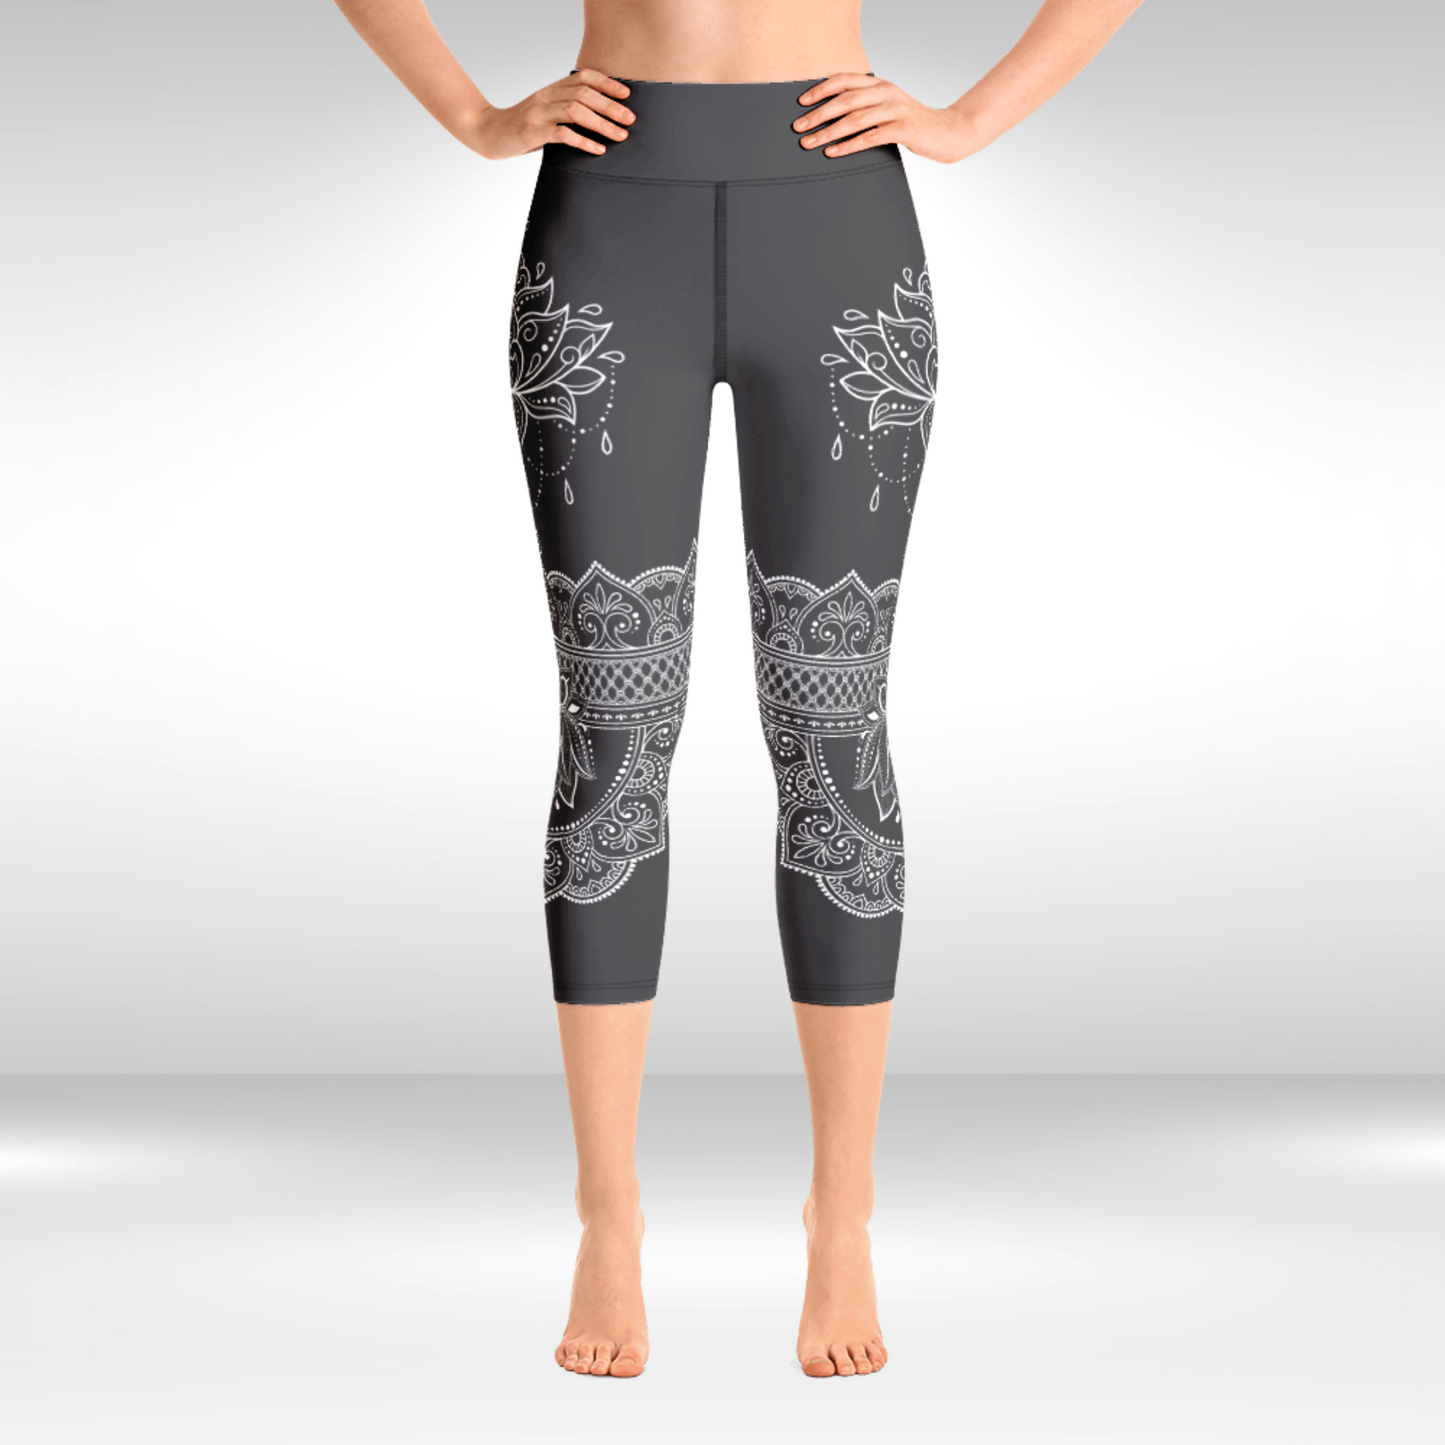 Women Yoga Legging - Grey and White Lotus Print